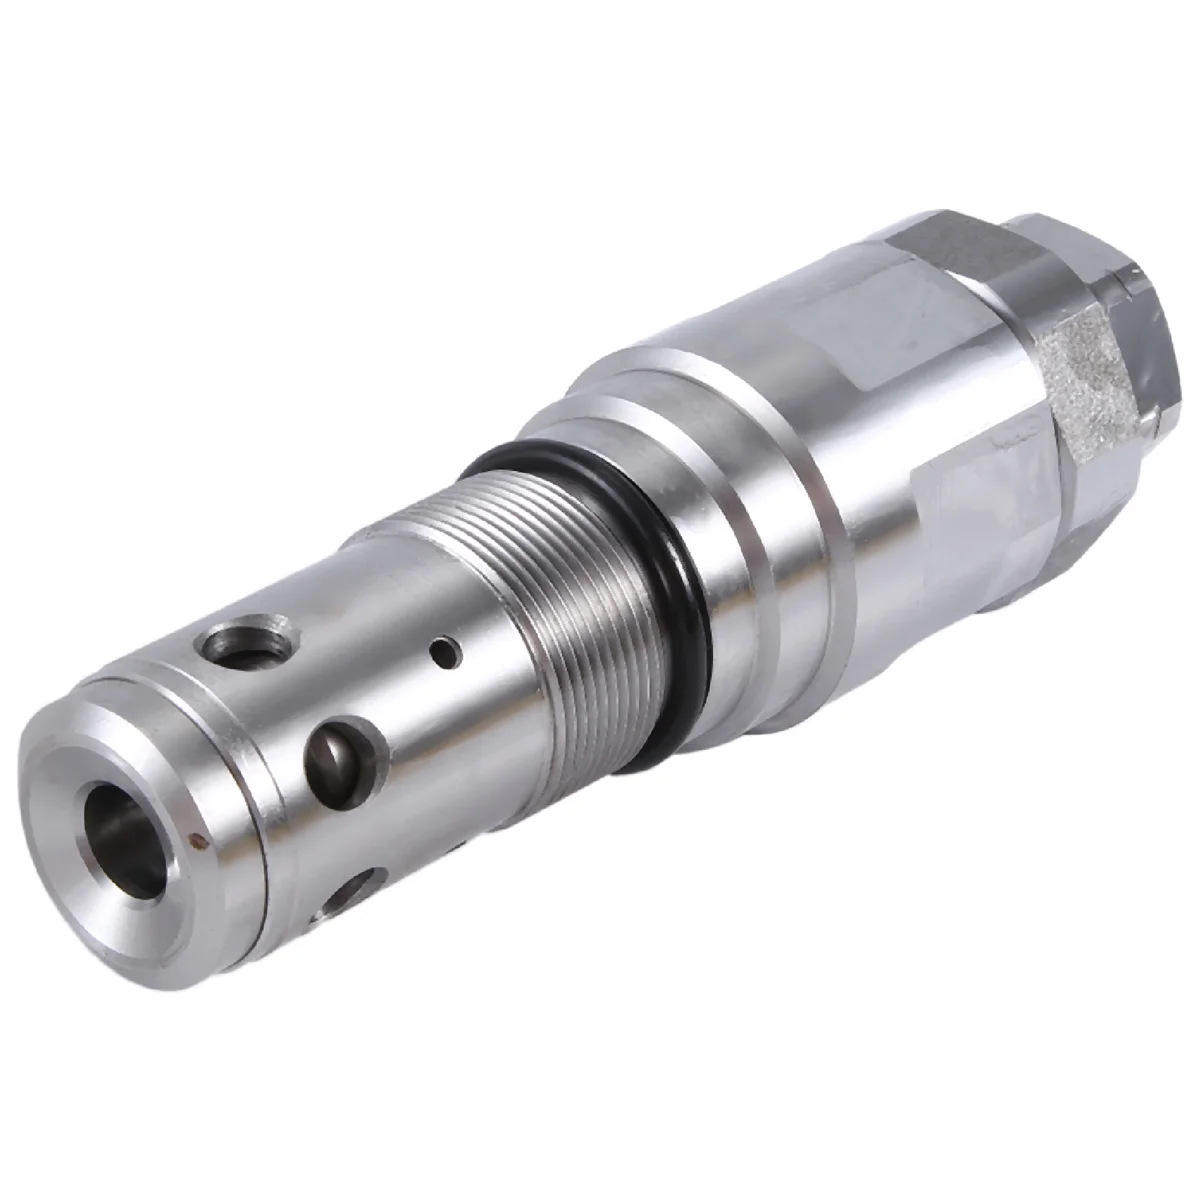 Гидравлический предохранительный клапан для экскаватора Kobelco EX200-5 ZAX200 ZAX240-3 SK200-6 SK200-6E DH200-5 4386065 YN22V00014F1 - 1